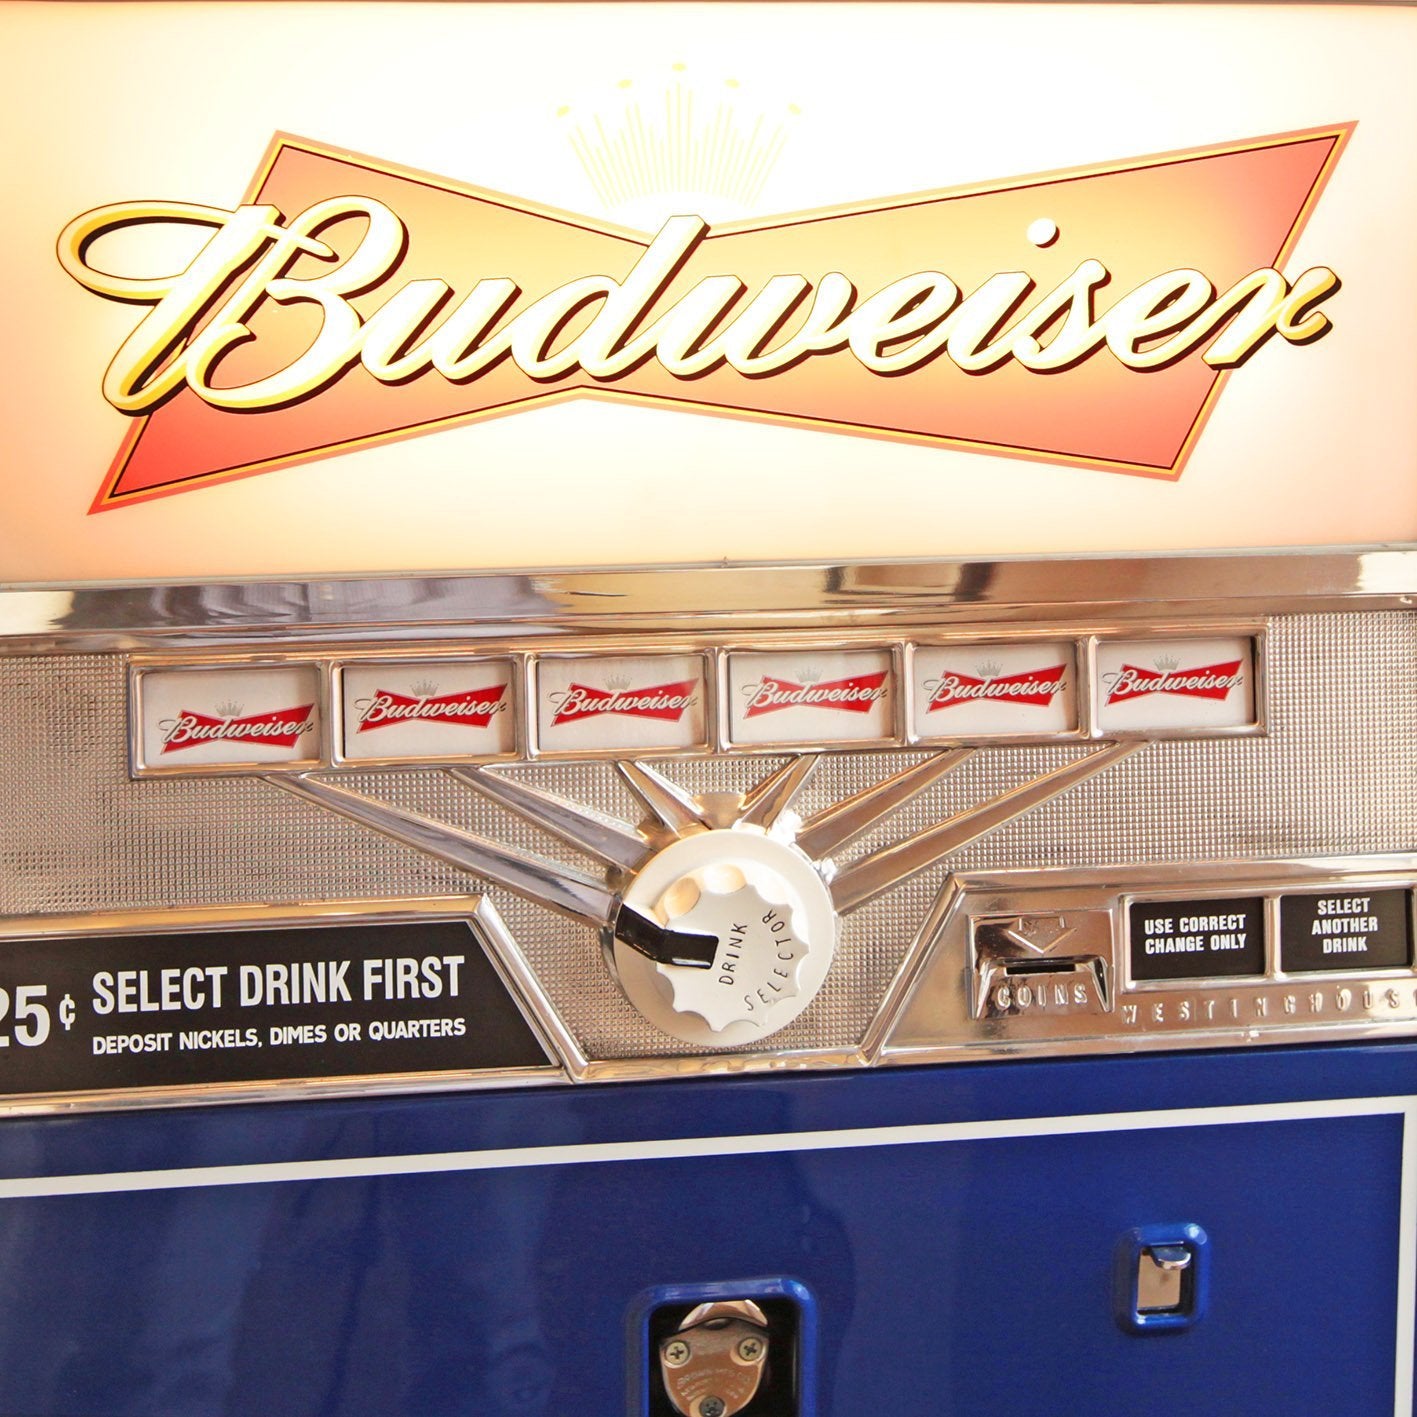 Budweiser Vending Machine 96 Can Capacity